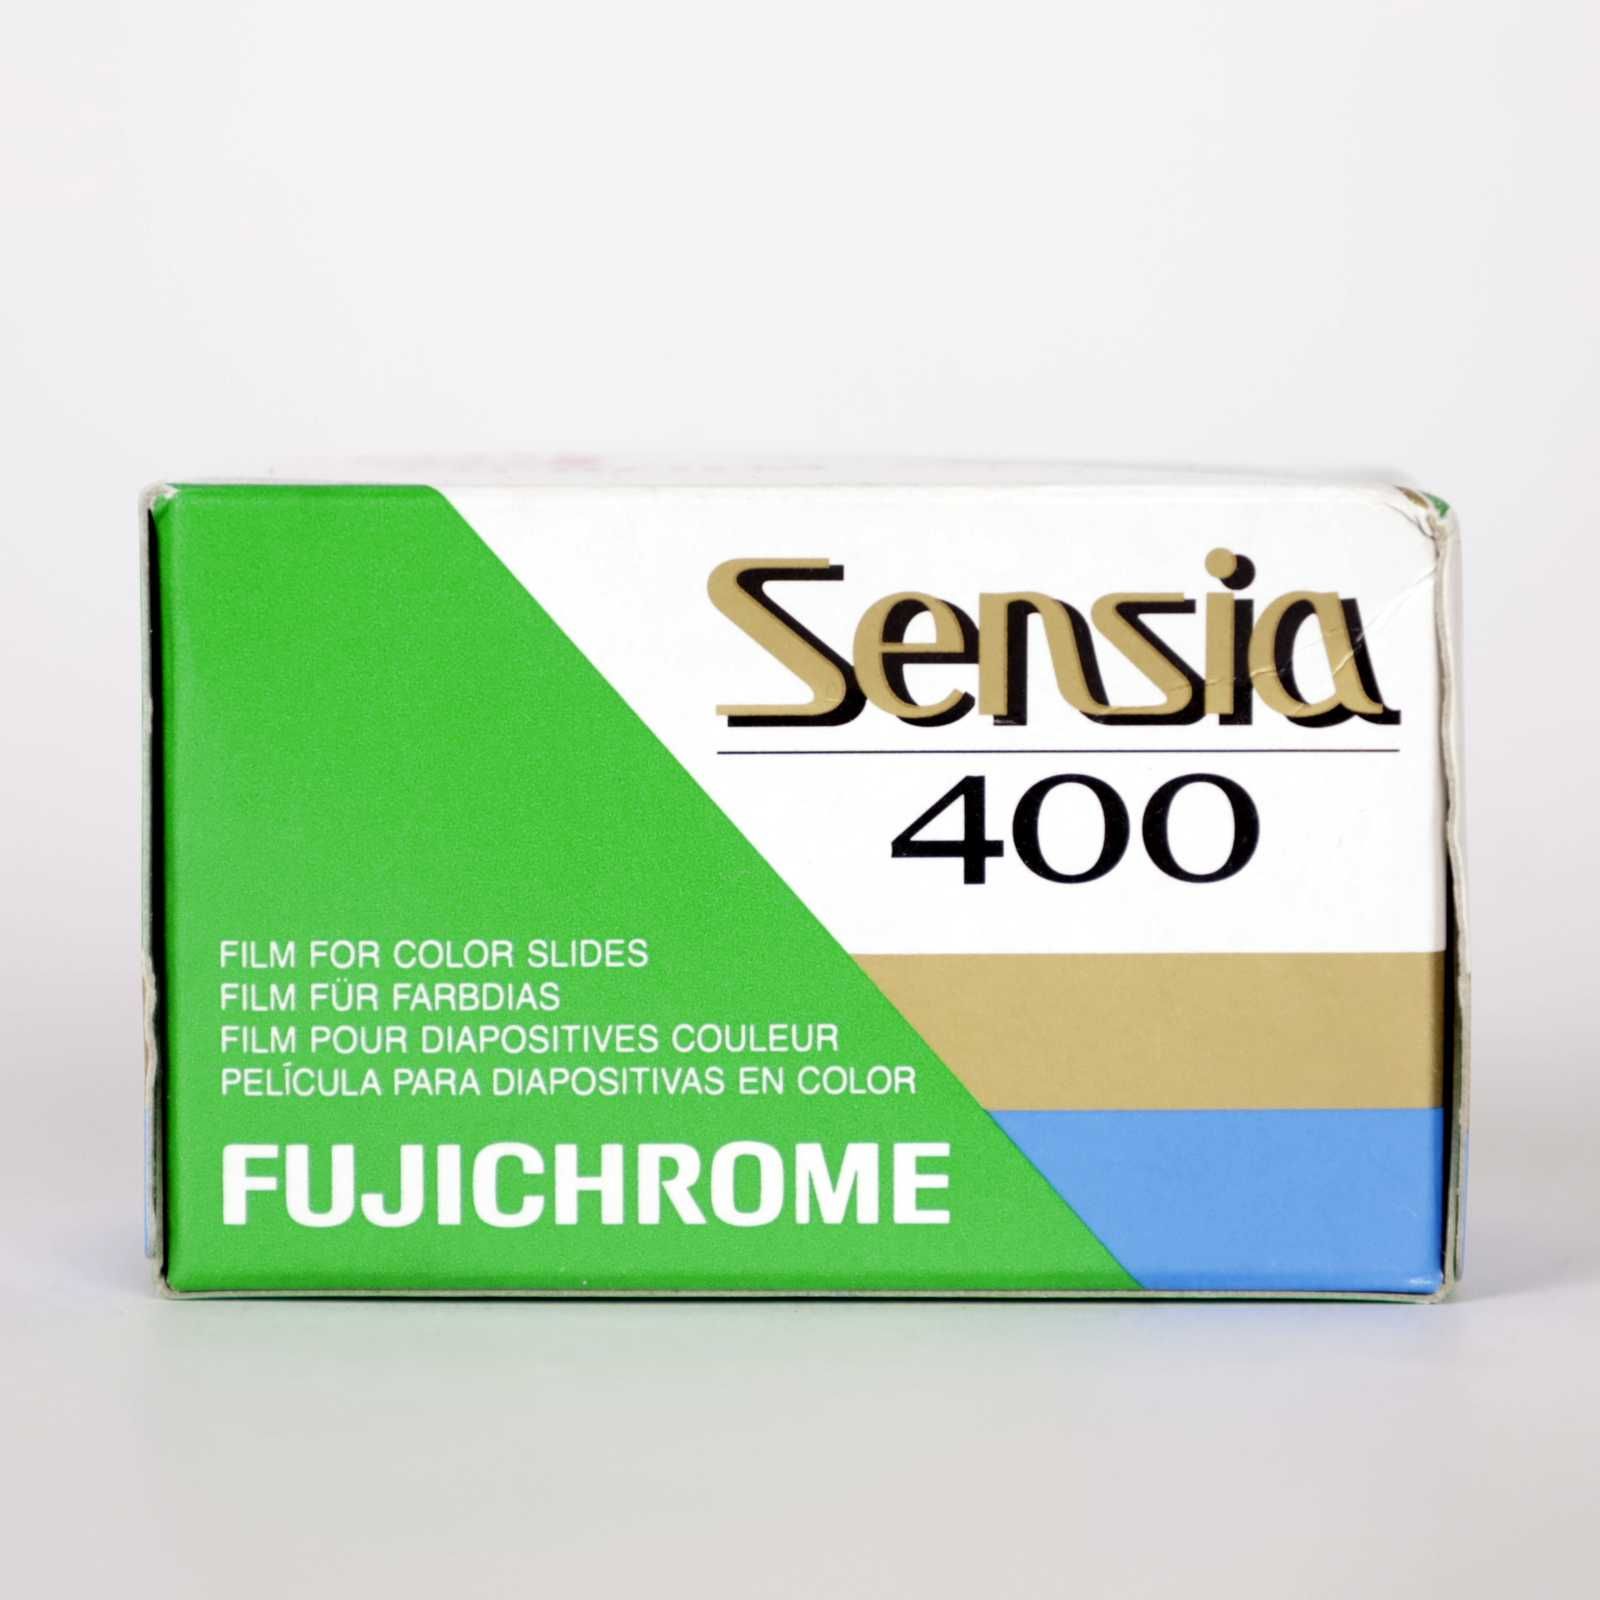 Filme 35mm Fuji Sensia 400